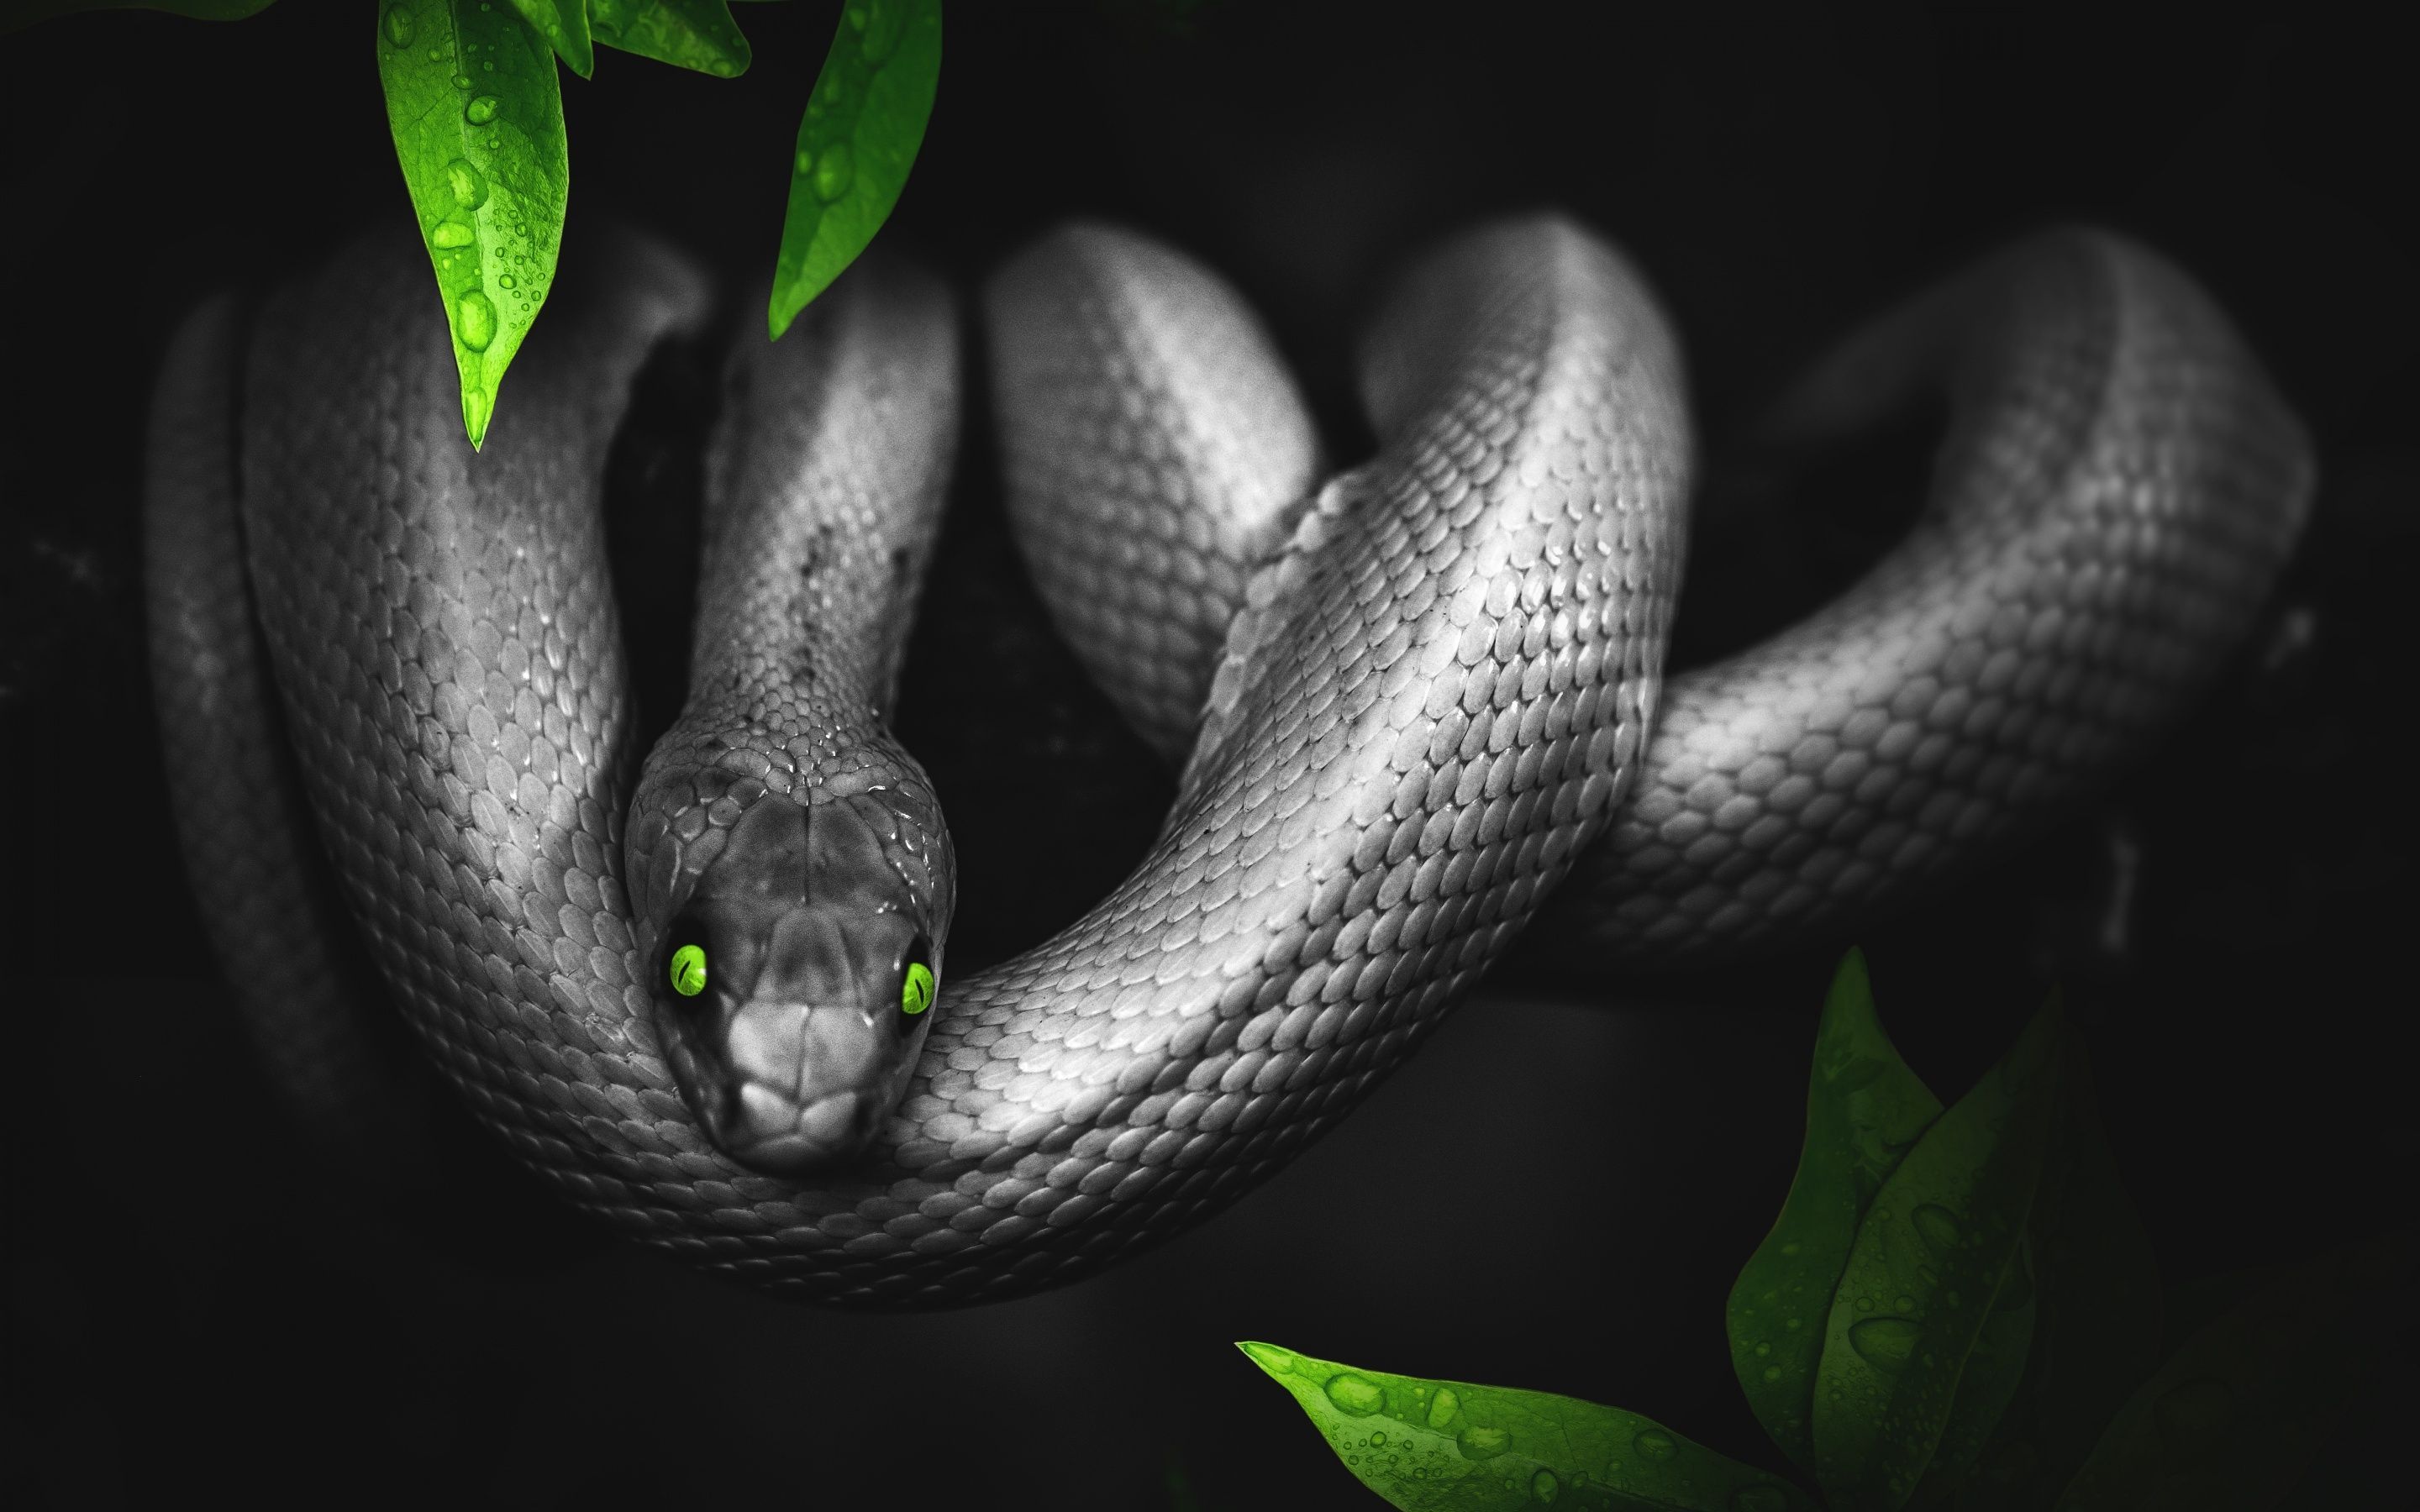 Snake Wallpaper 4K, Reptile, Dark, Green eyes, Jungle